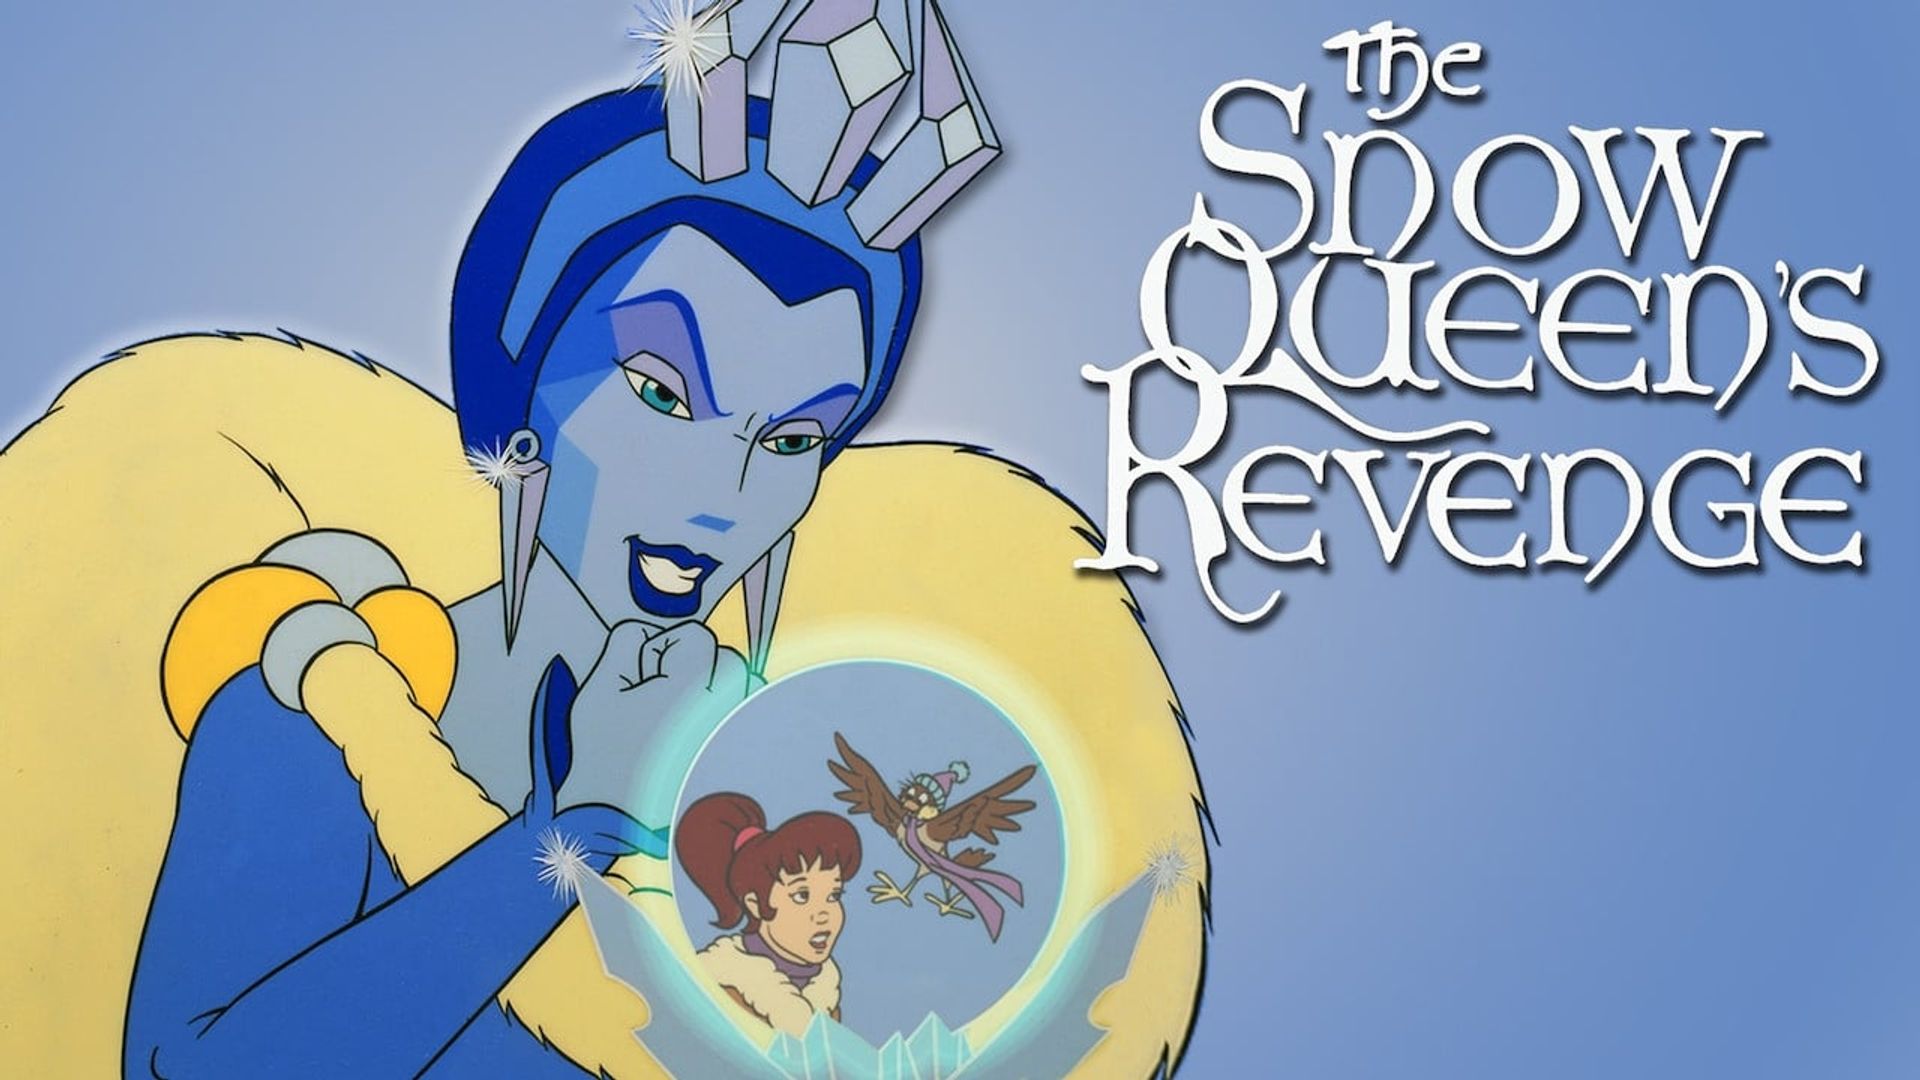 The Snow Queen's Revenge background